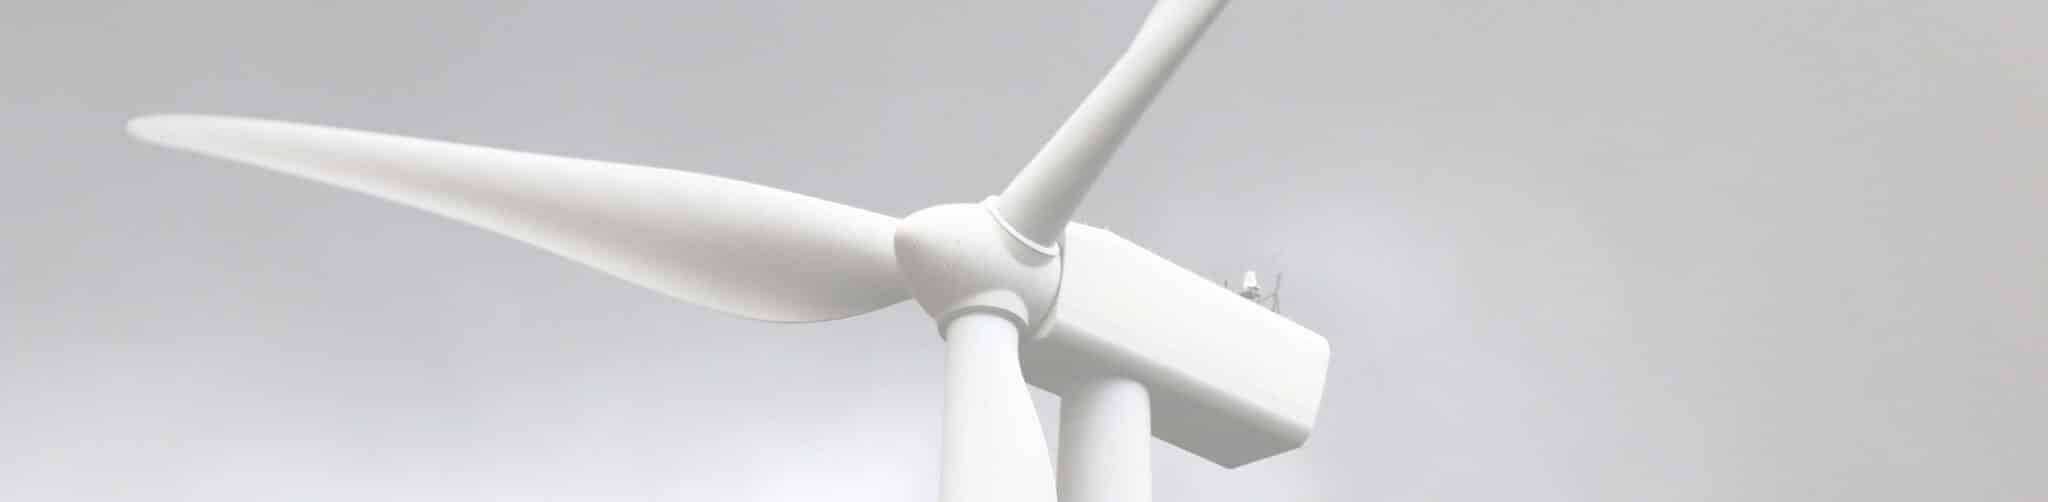 Cabecera sector eolico alargada transparencia 40 scaled About Windbotix